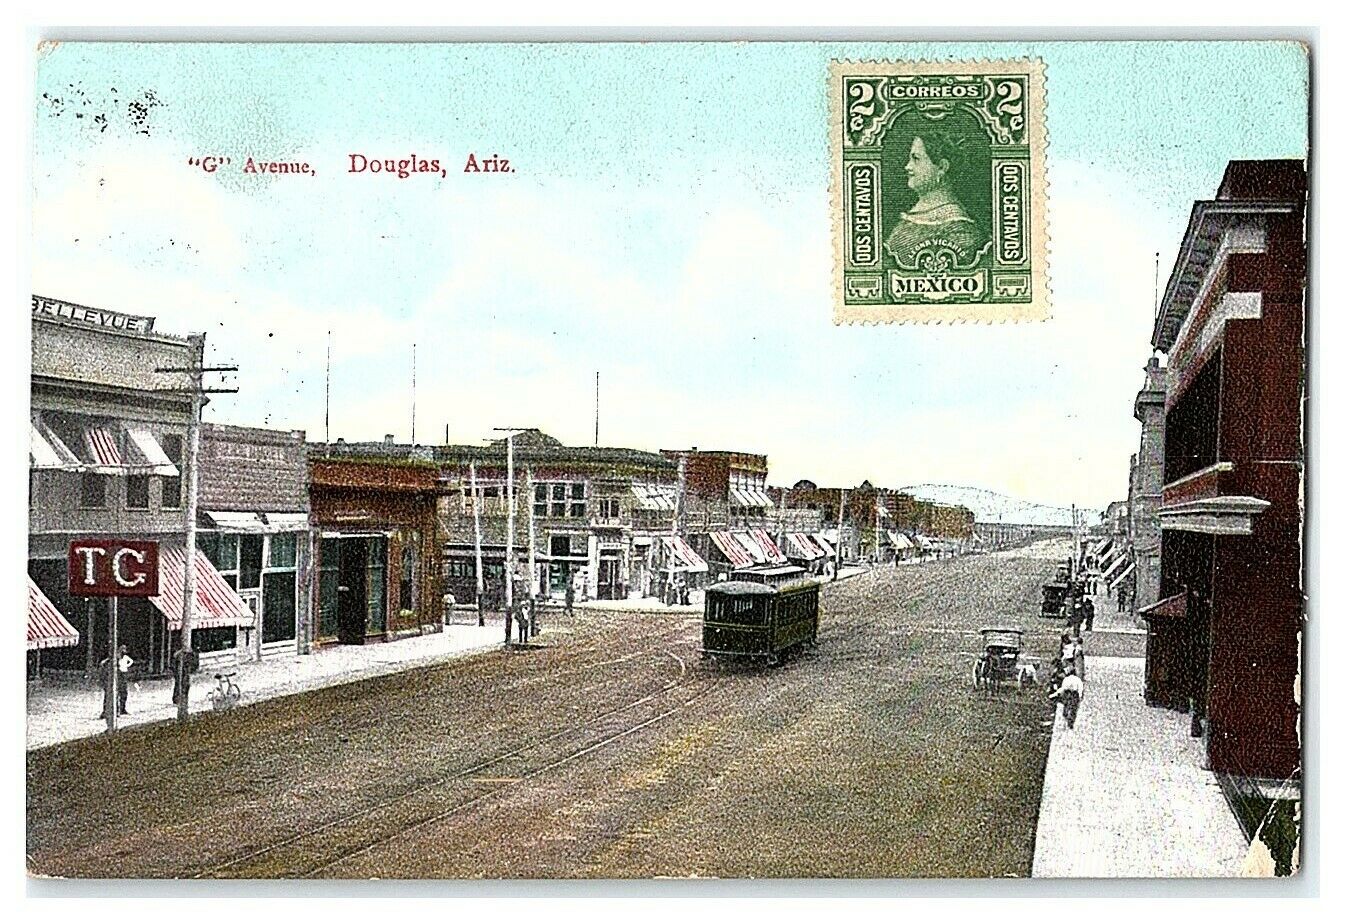 G Avenue, Douglas, Az Postcard *7e(2)11